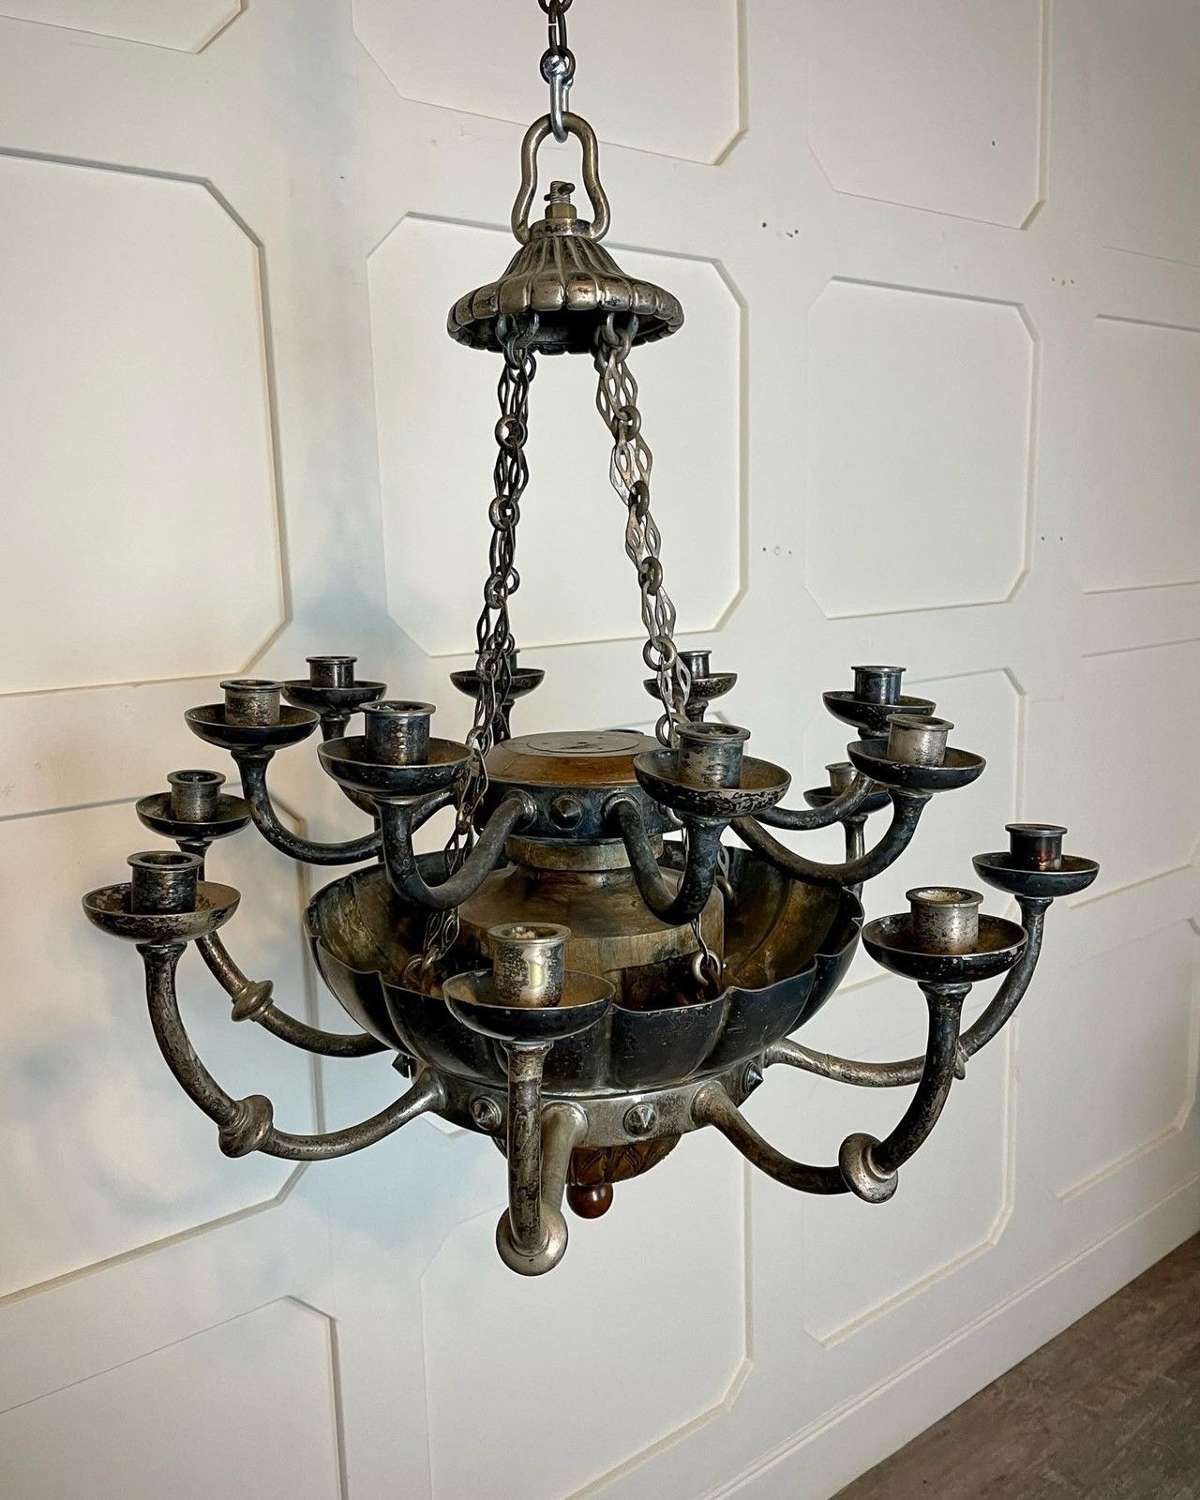 Silver plated 15 arm candelabra chandelier